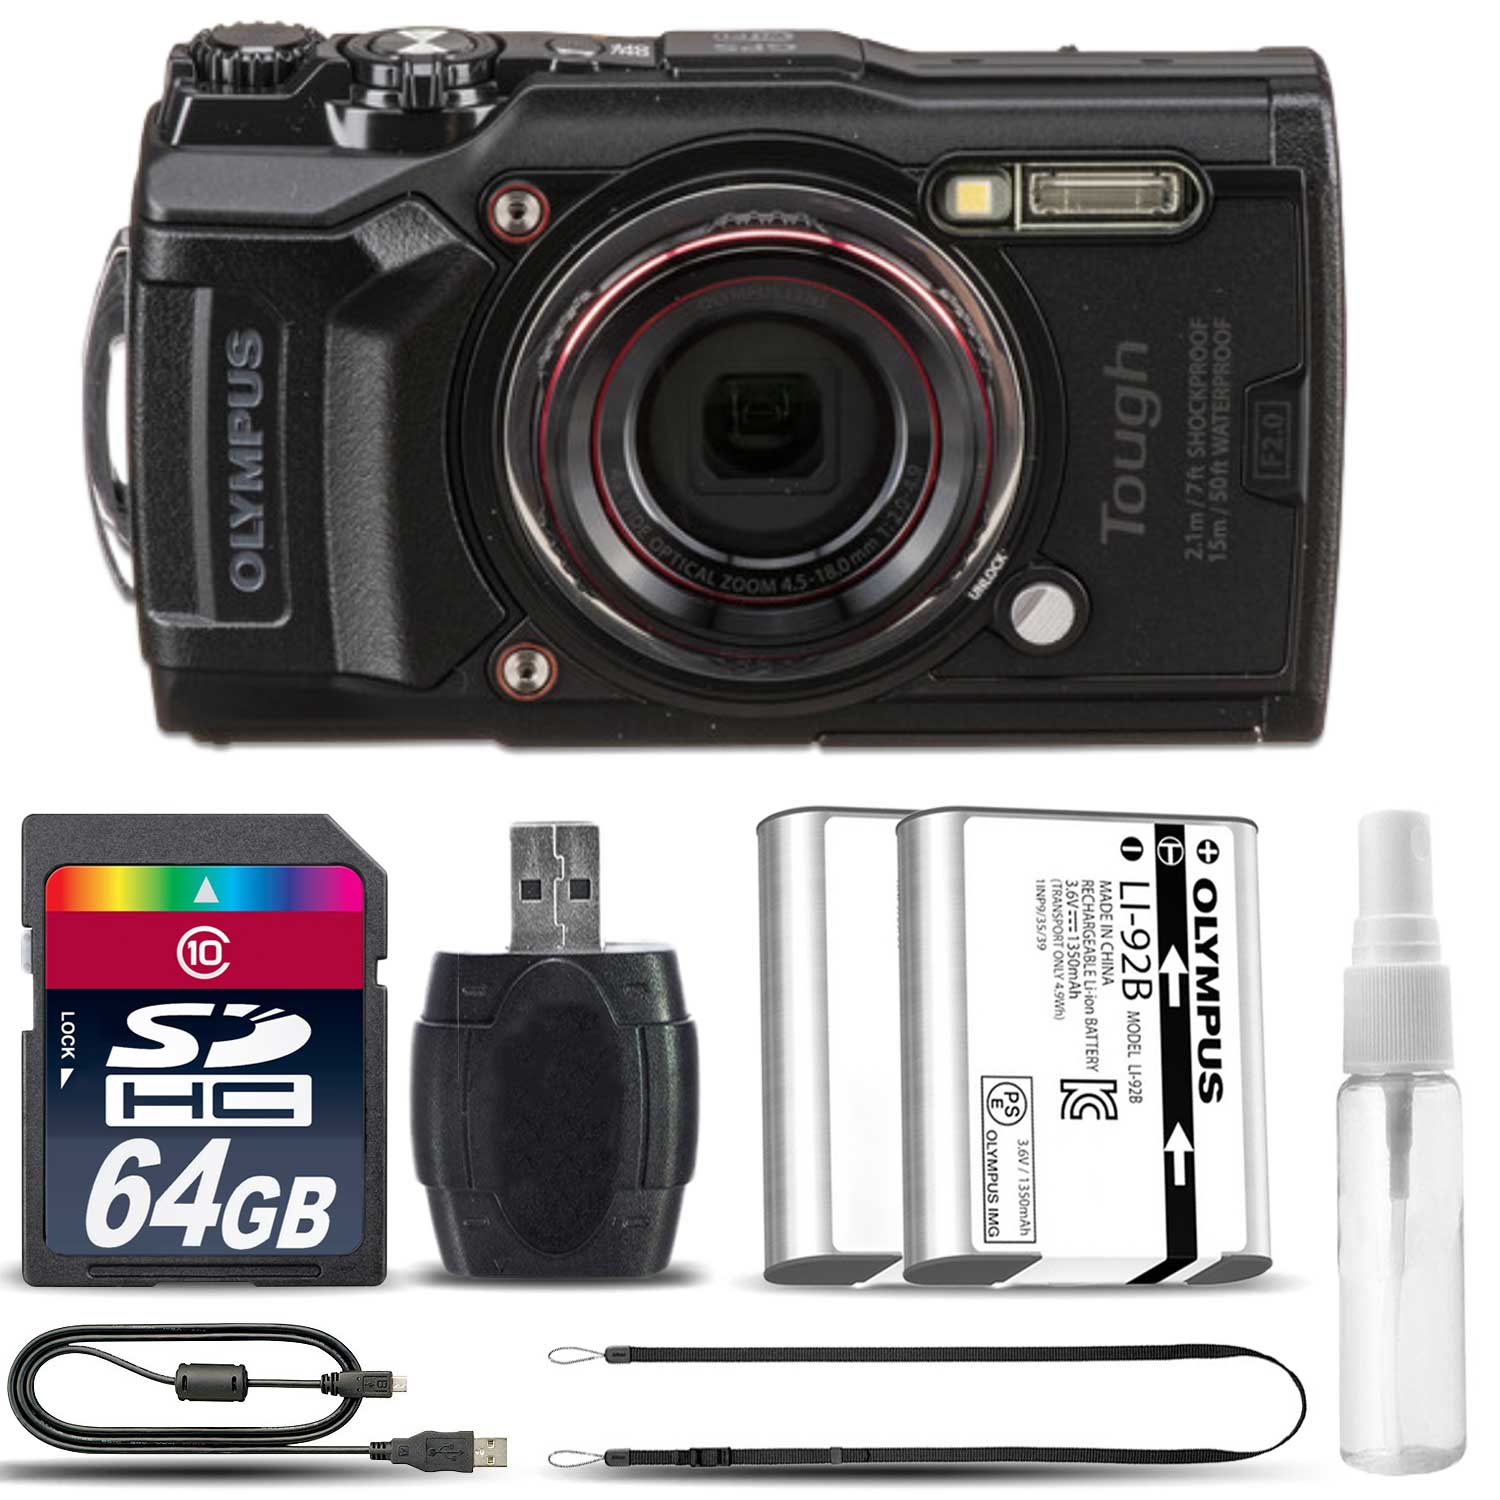 TOUGH TG-6 Digital Waterproof Camera (Black) + Extra Battery - 64GB Kit *FREE SHIPPING*